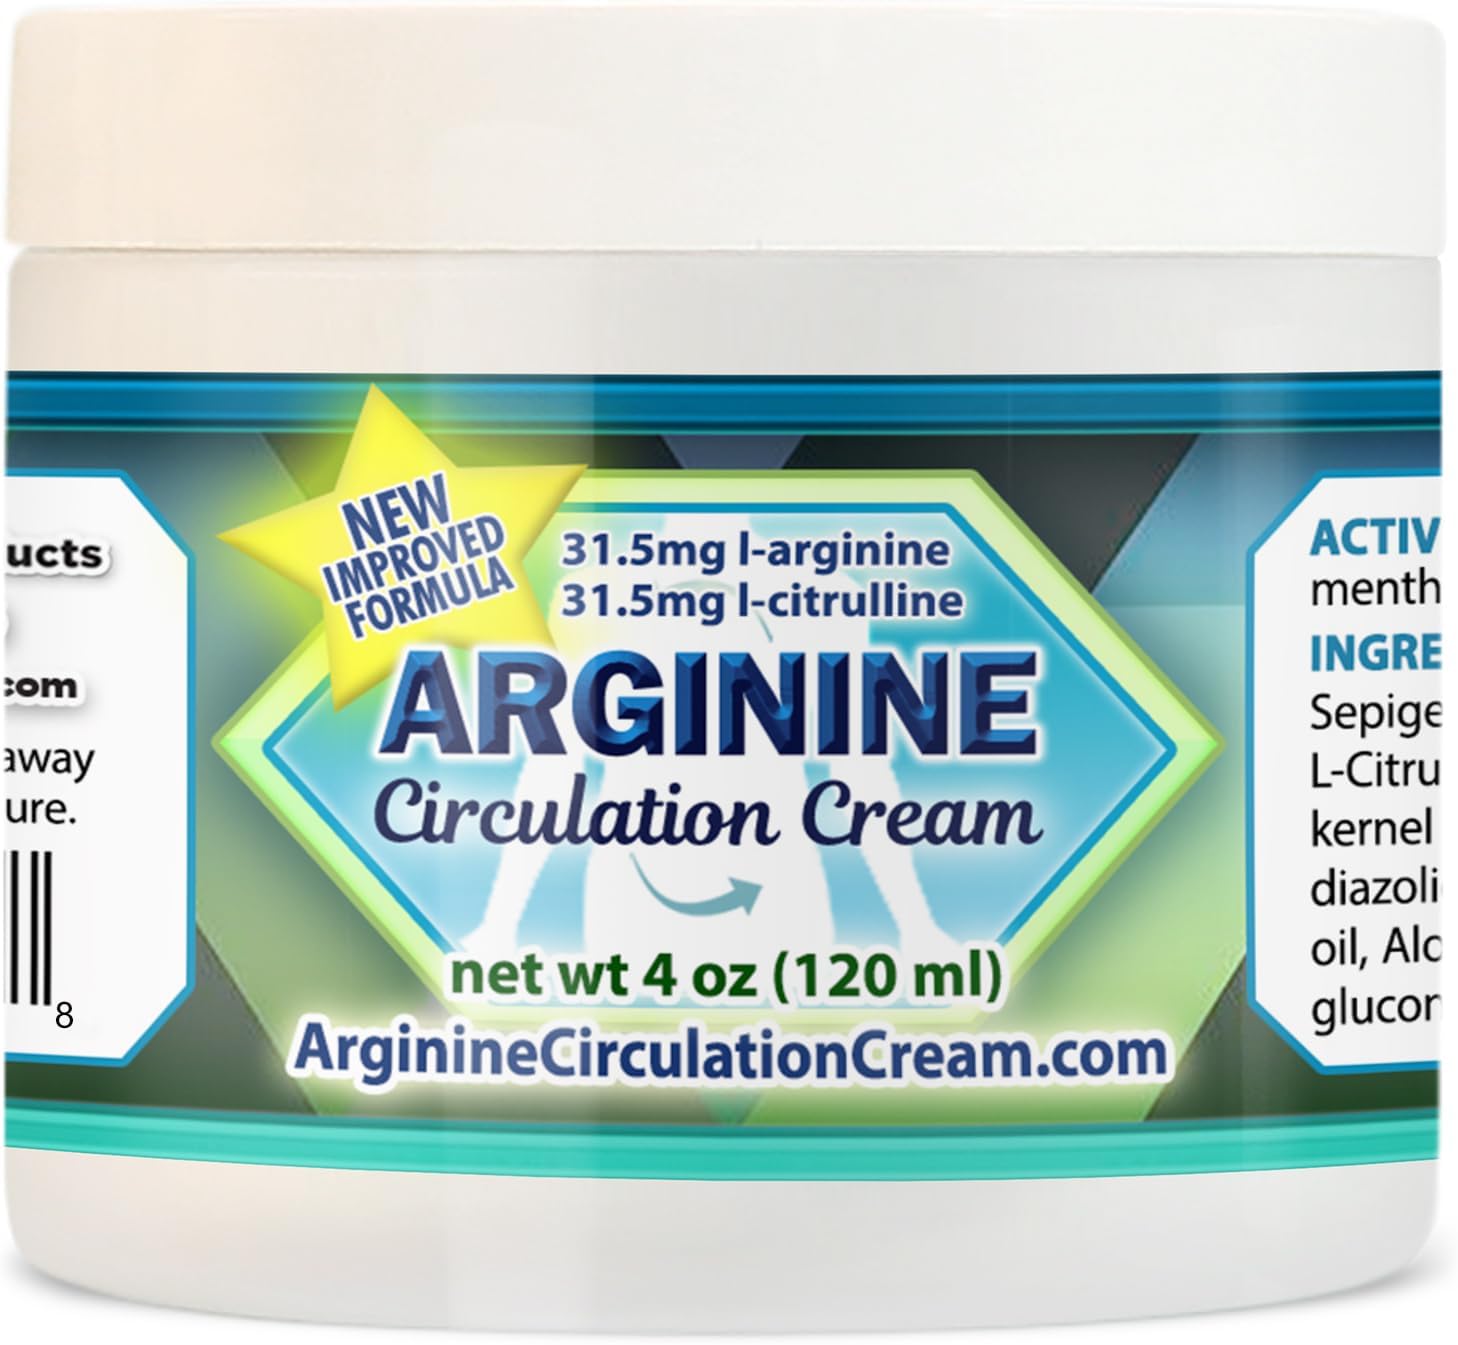 Arginine Circulation Cream 4 ounces - Menthol, L Arginine & L Citrulline Lotion - Supports Healt